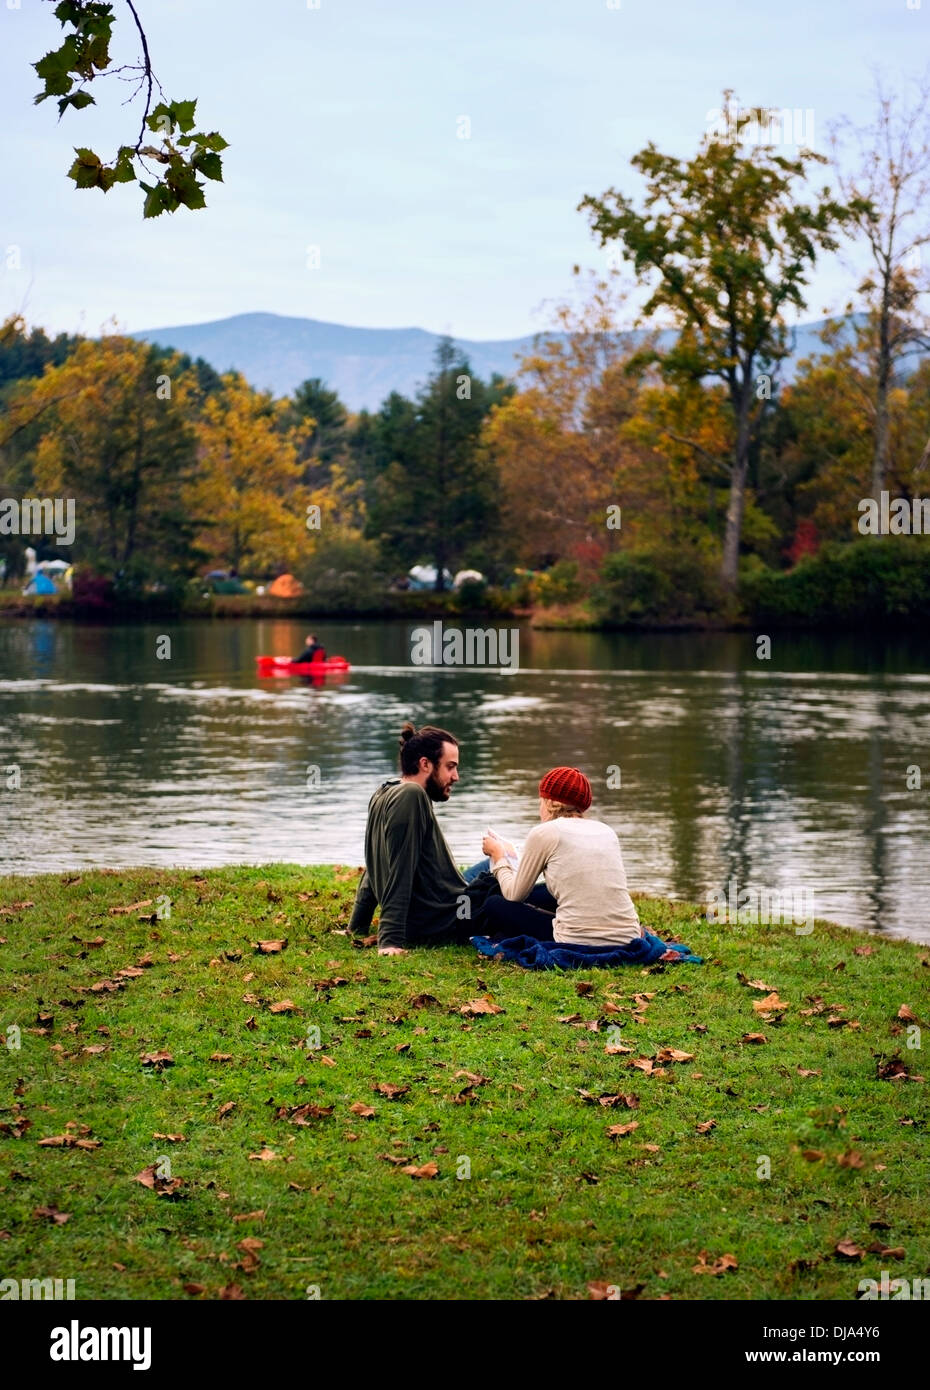 A couple enjoying an autumn day by the lake at The Leaf Festival (Lake Eden Arts Festival), Black Mountain North Carolina. Stock Photo